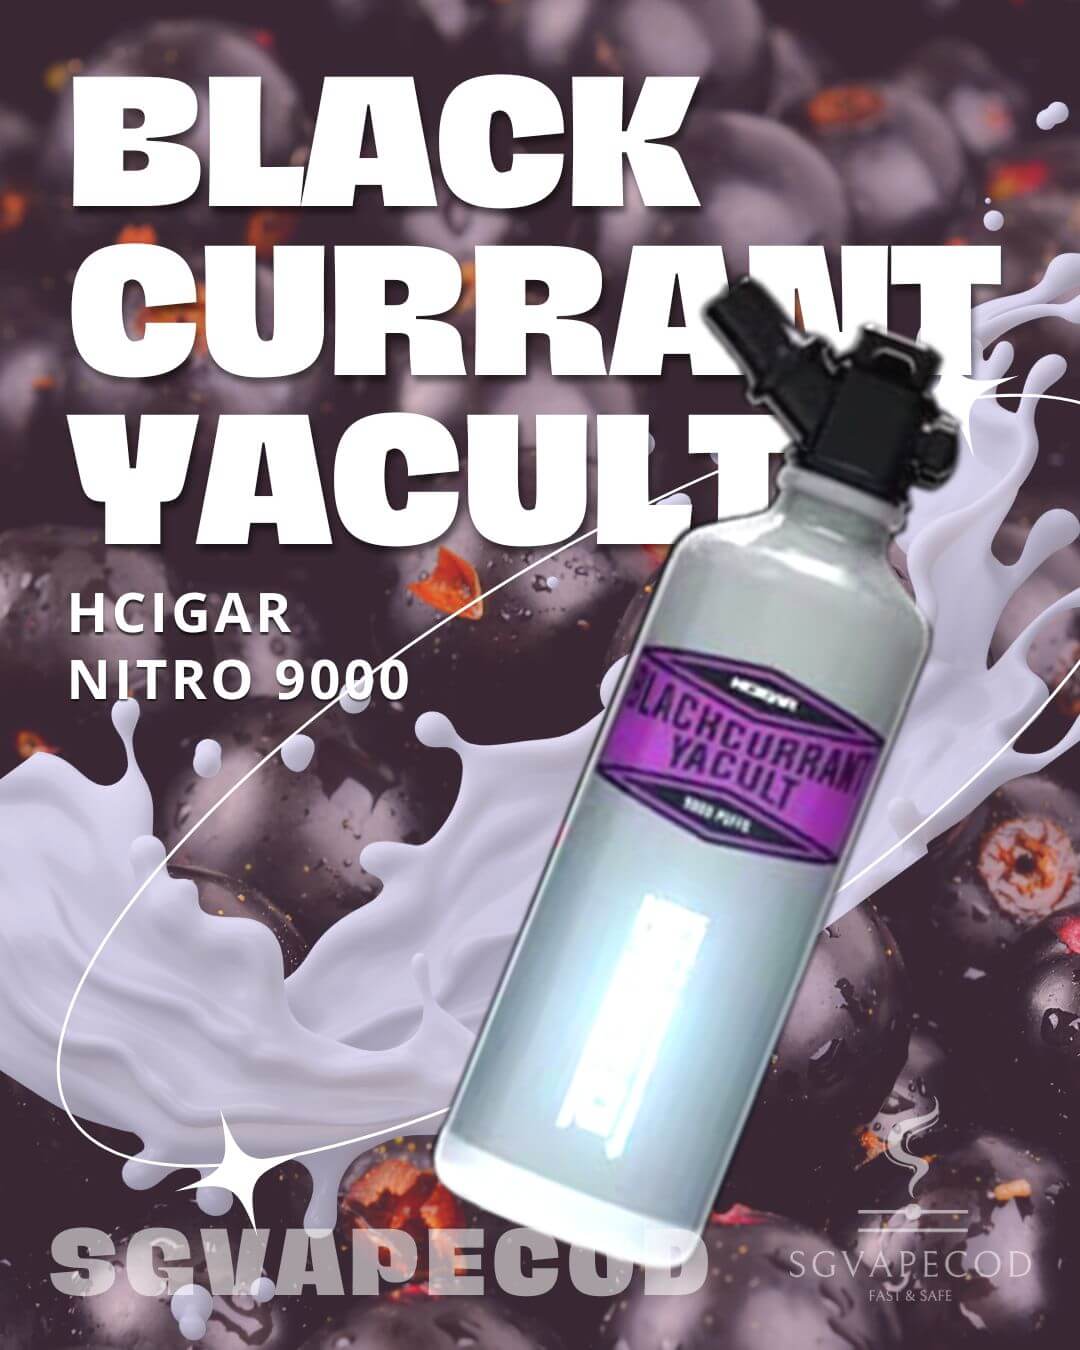 Hcigar Nitro 9000-Blackcurrant Yacult